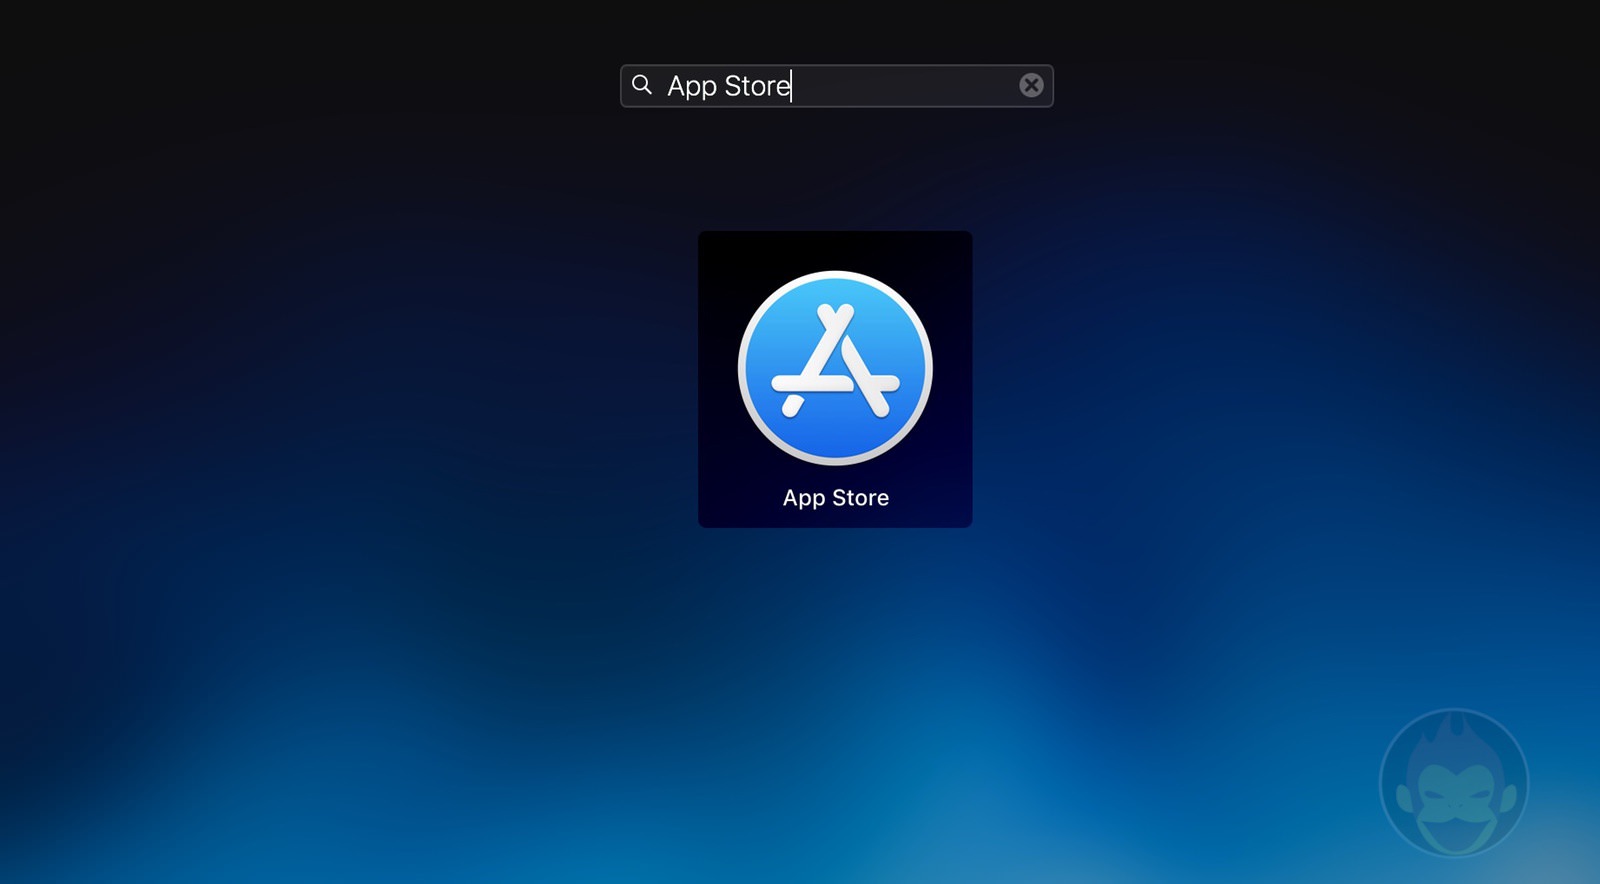 Mac-App-Store-Icon-01.jpg